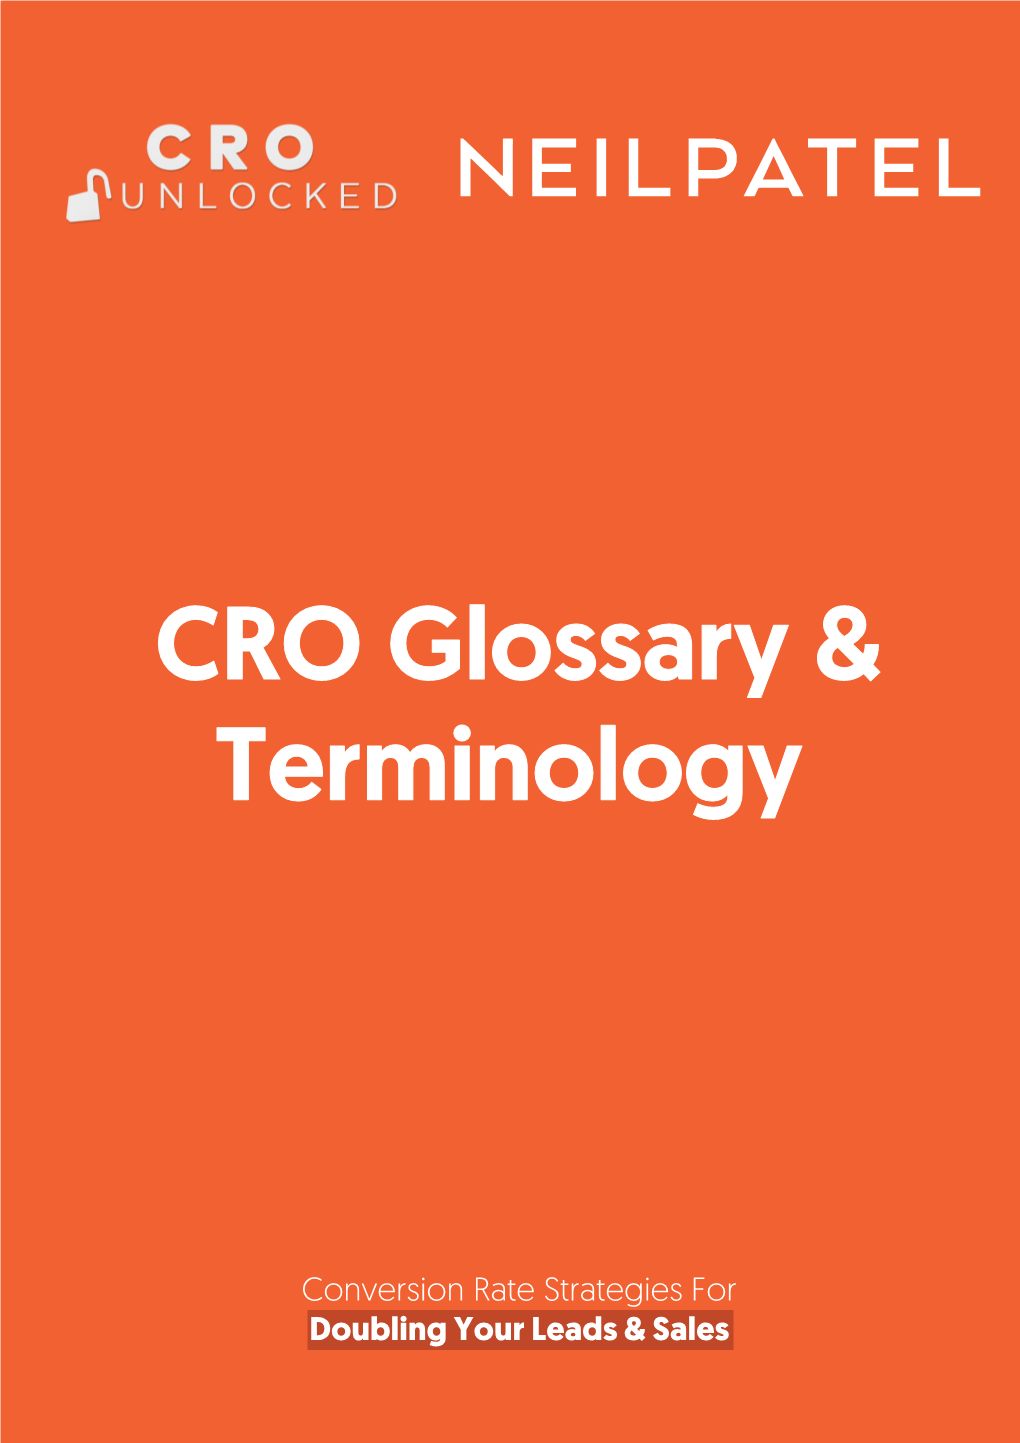 CRO Glossary & Terminology